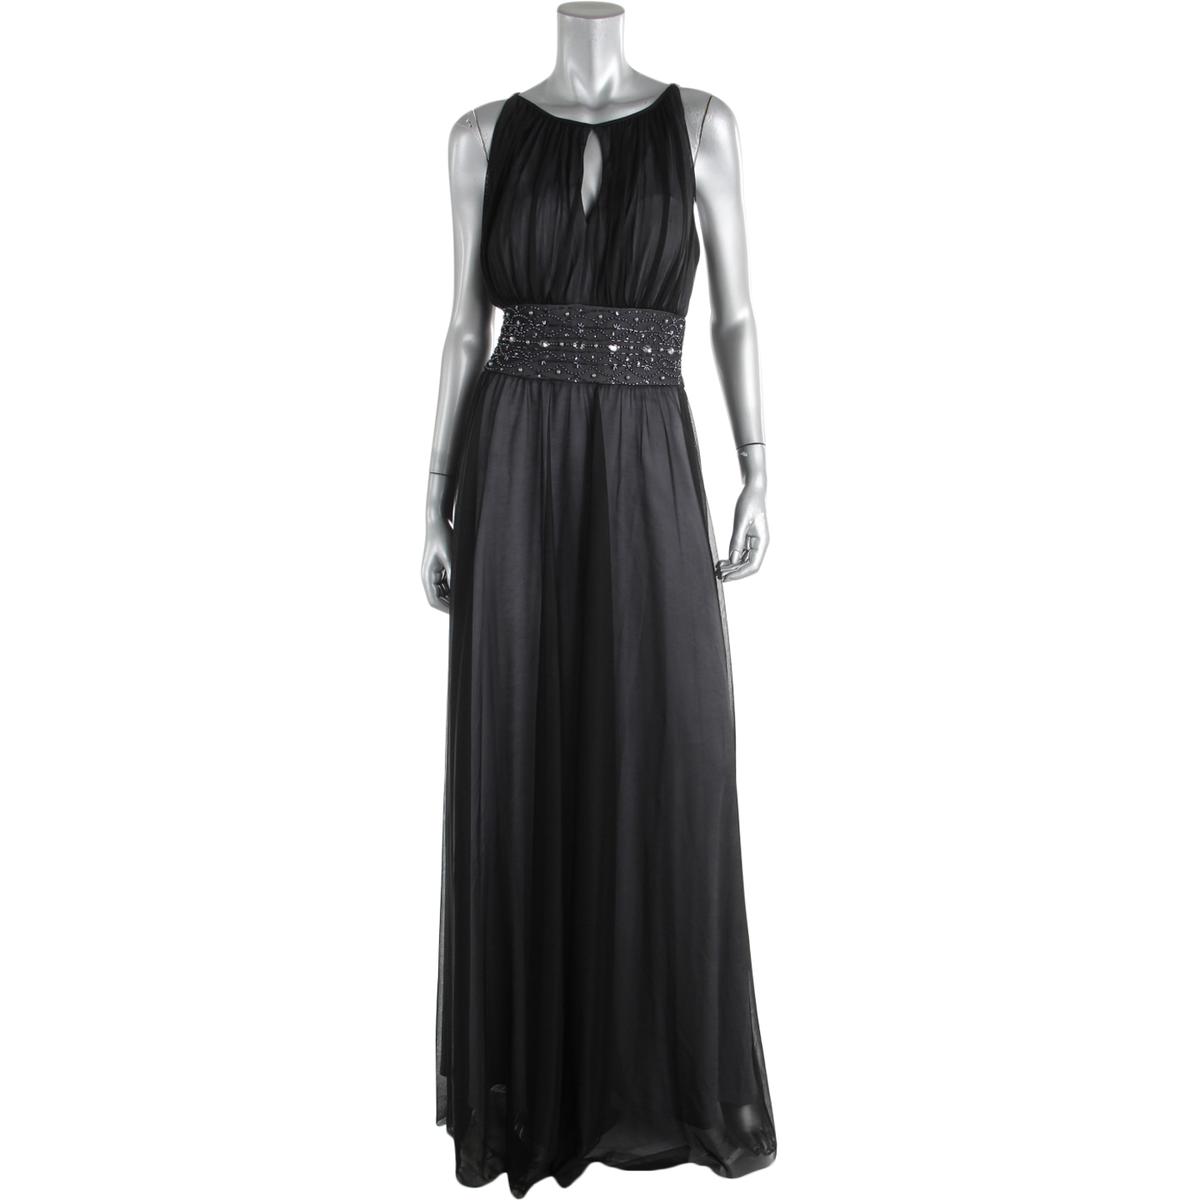 Jessica Howard 8454 Womens Embellished Prom Keyhole Evening Dress Gown BHFO